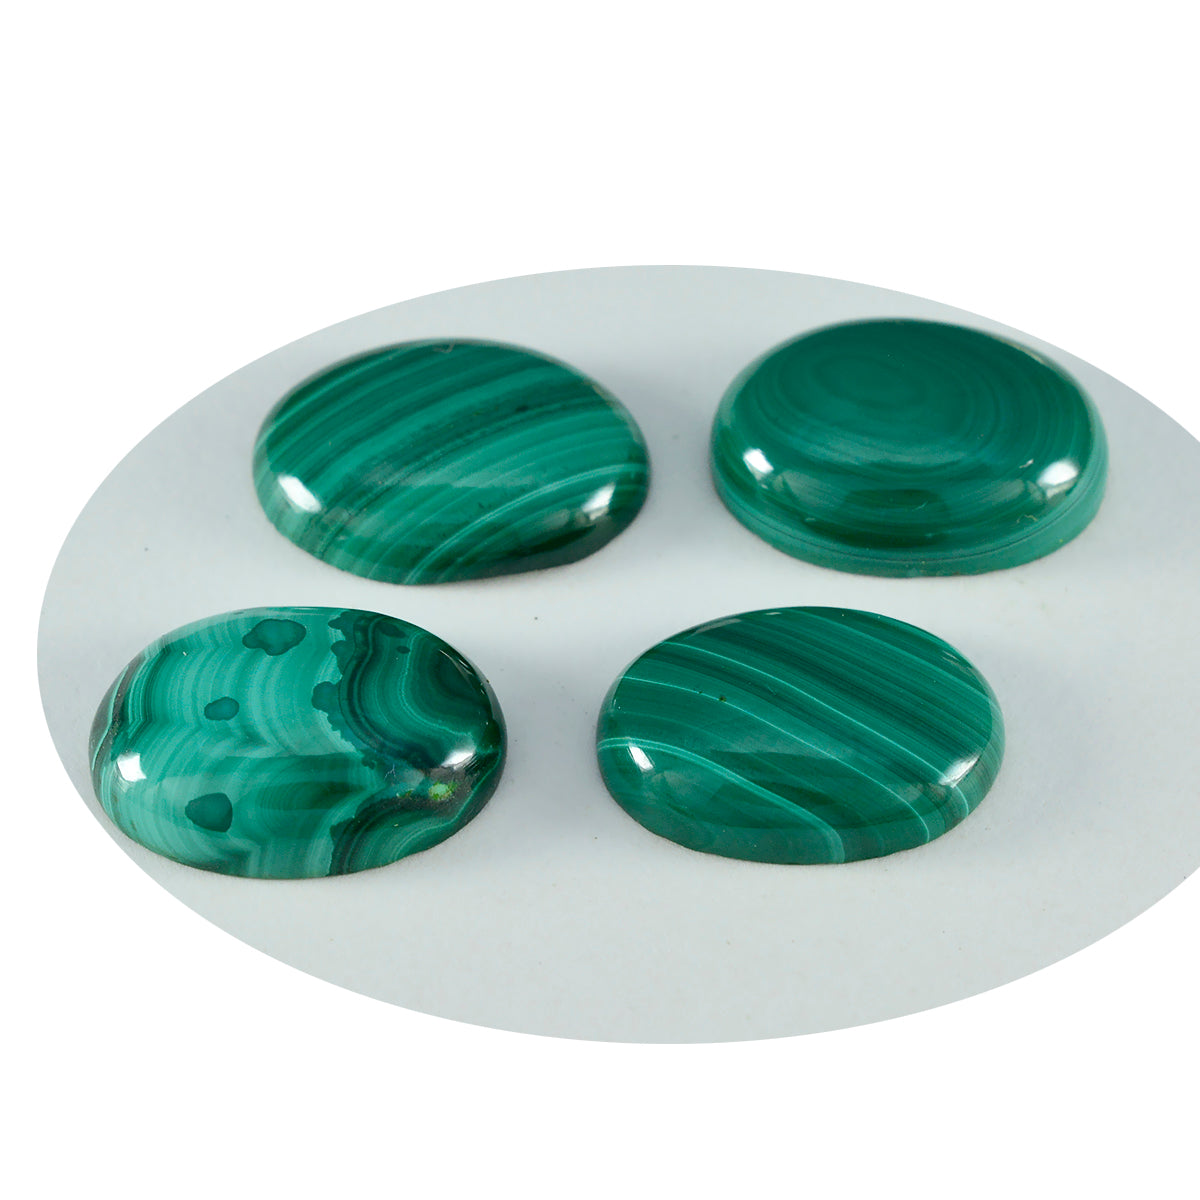 Riyogems 1PC Green Malachite Cabochon 10x12 mm Oval Shape A Quality Loose Stone